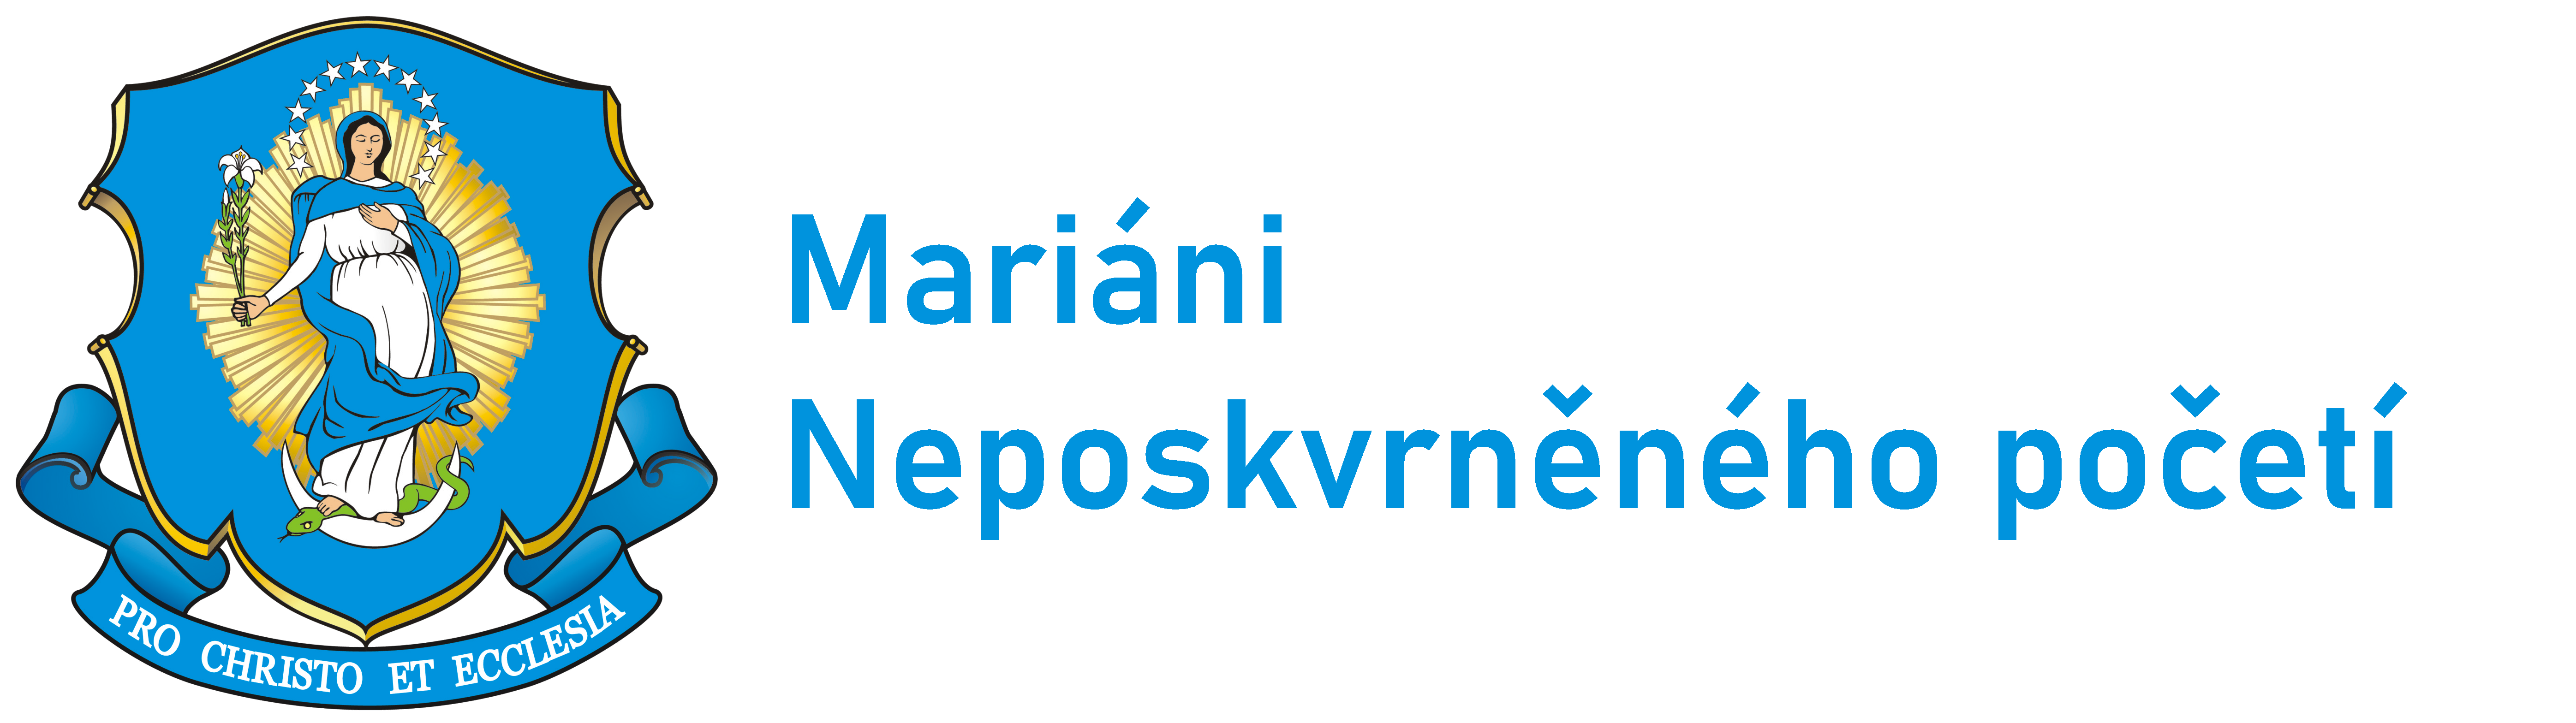 Logo Praha Hostivař - Mariáni ČR